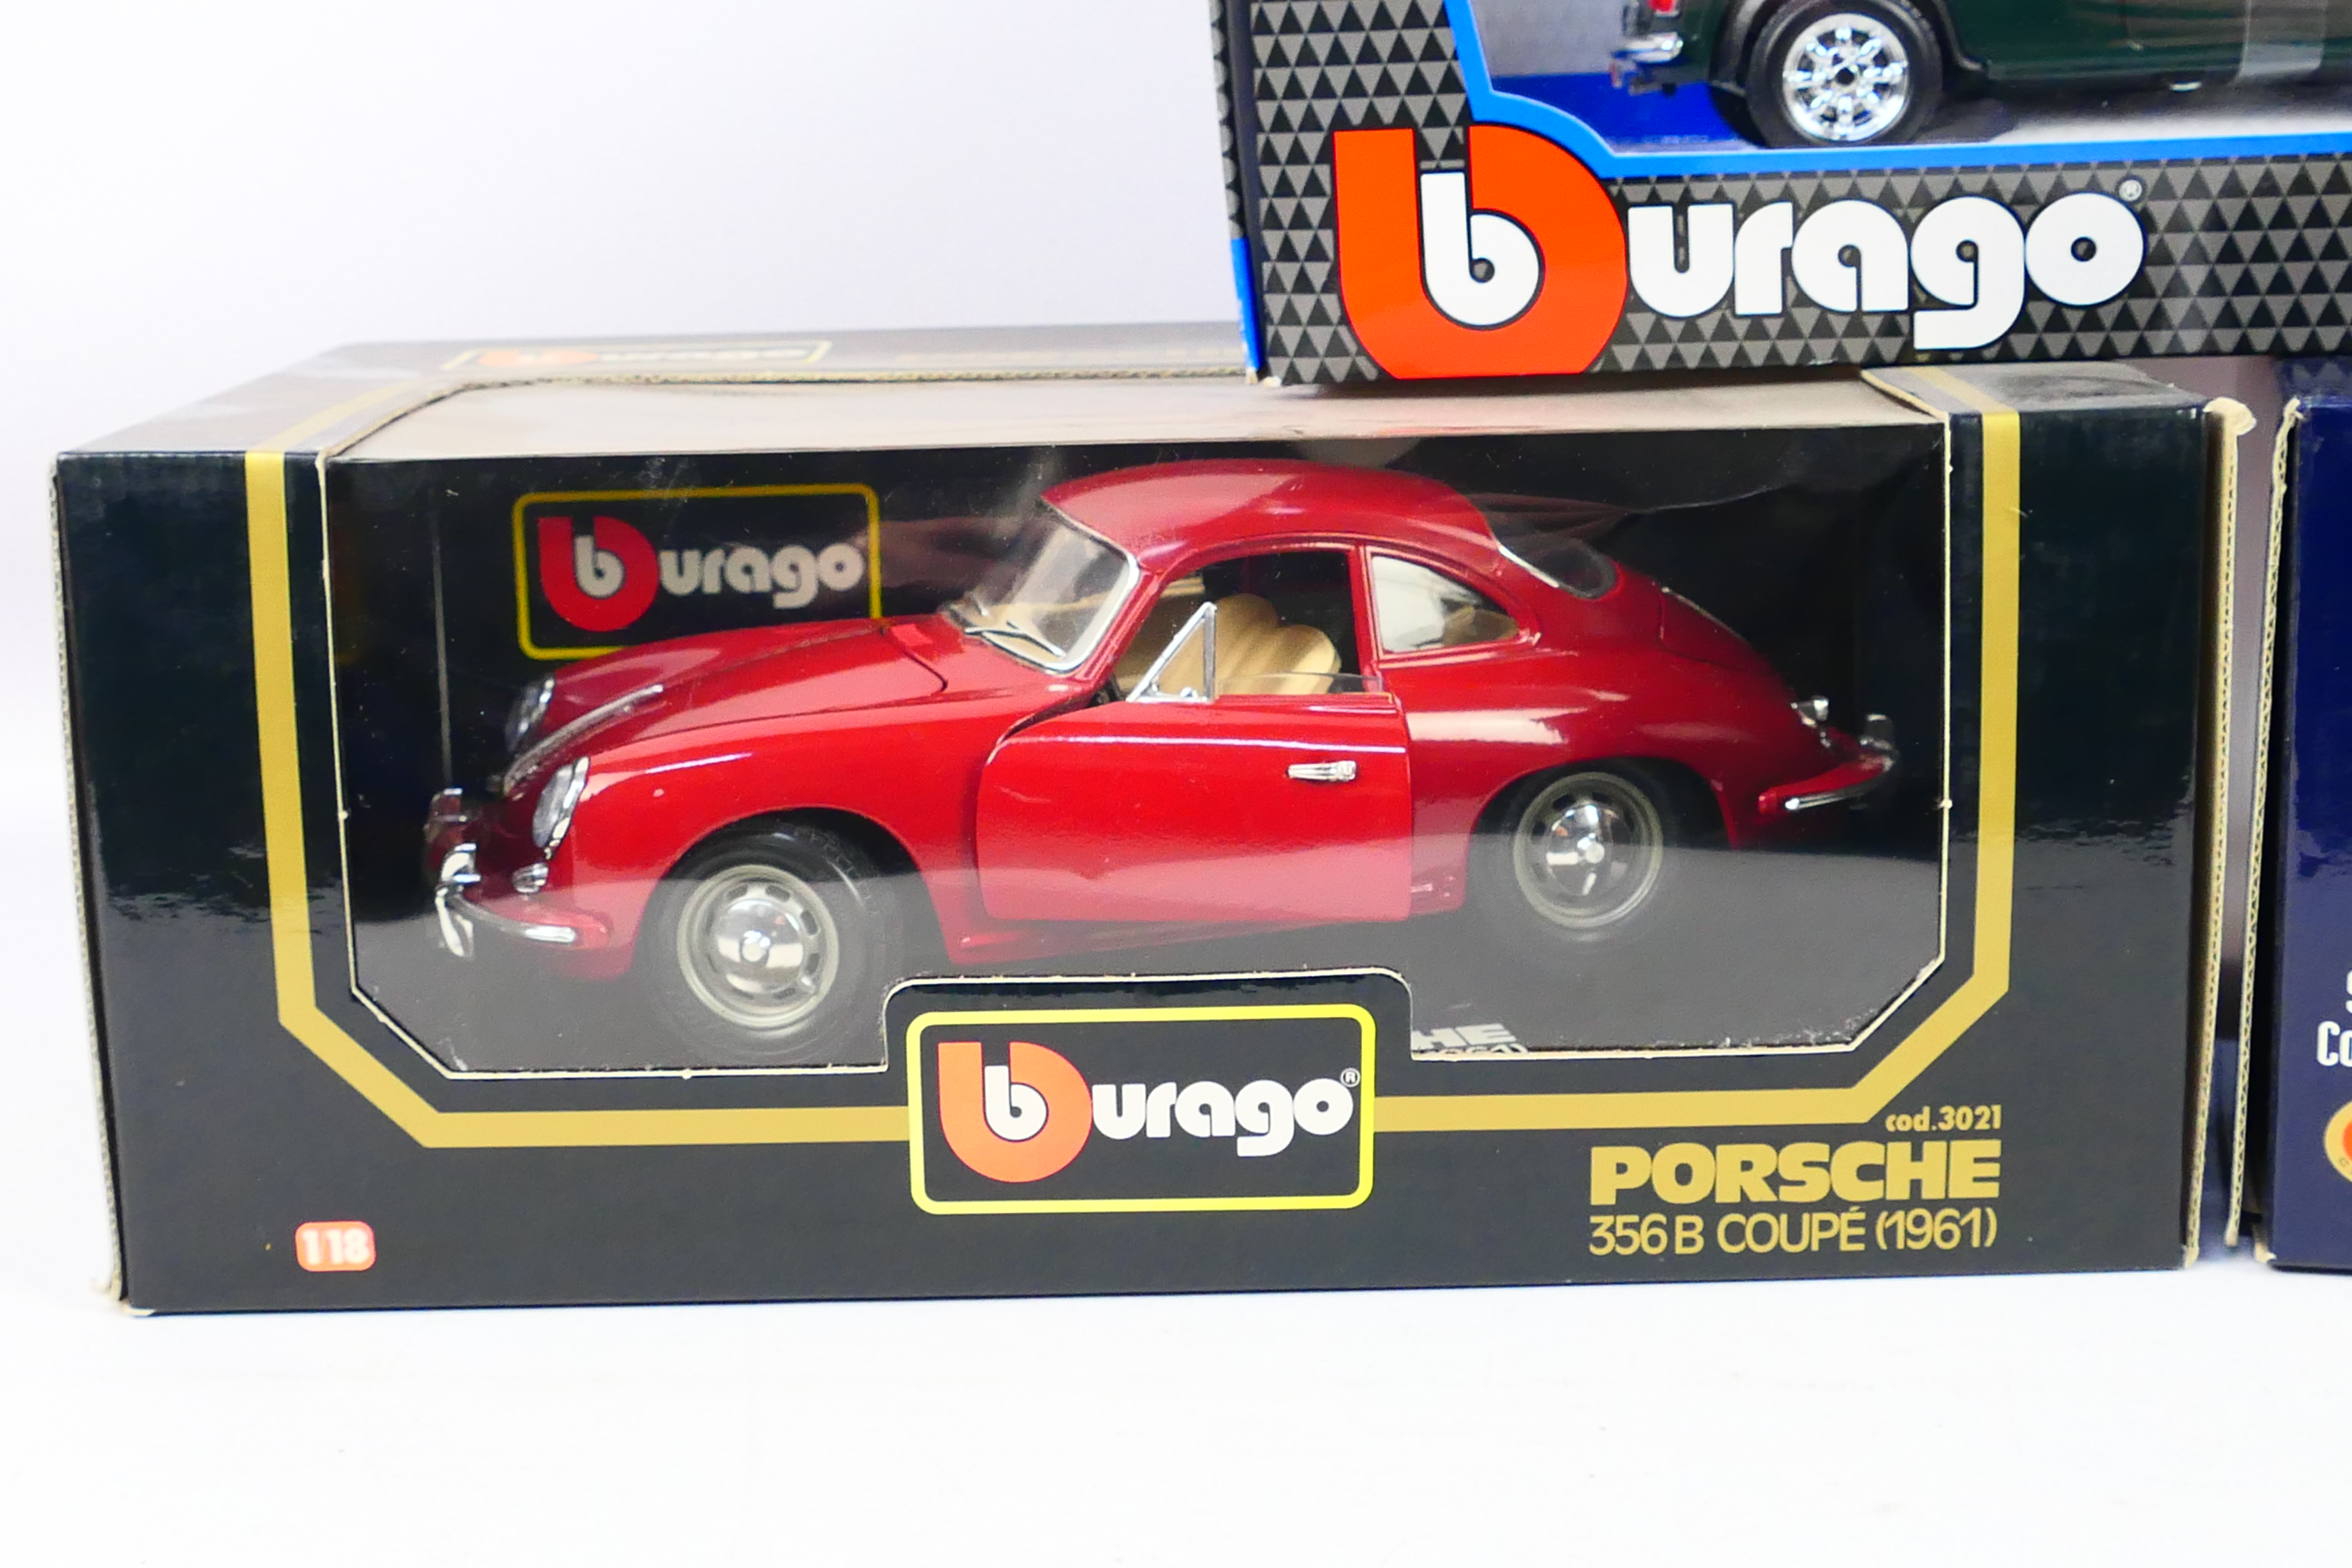 Bburago - Three boxed 1:18 scale diecast model cars from Bburago, - Image 3 of 4